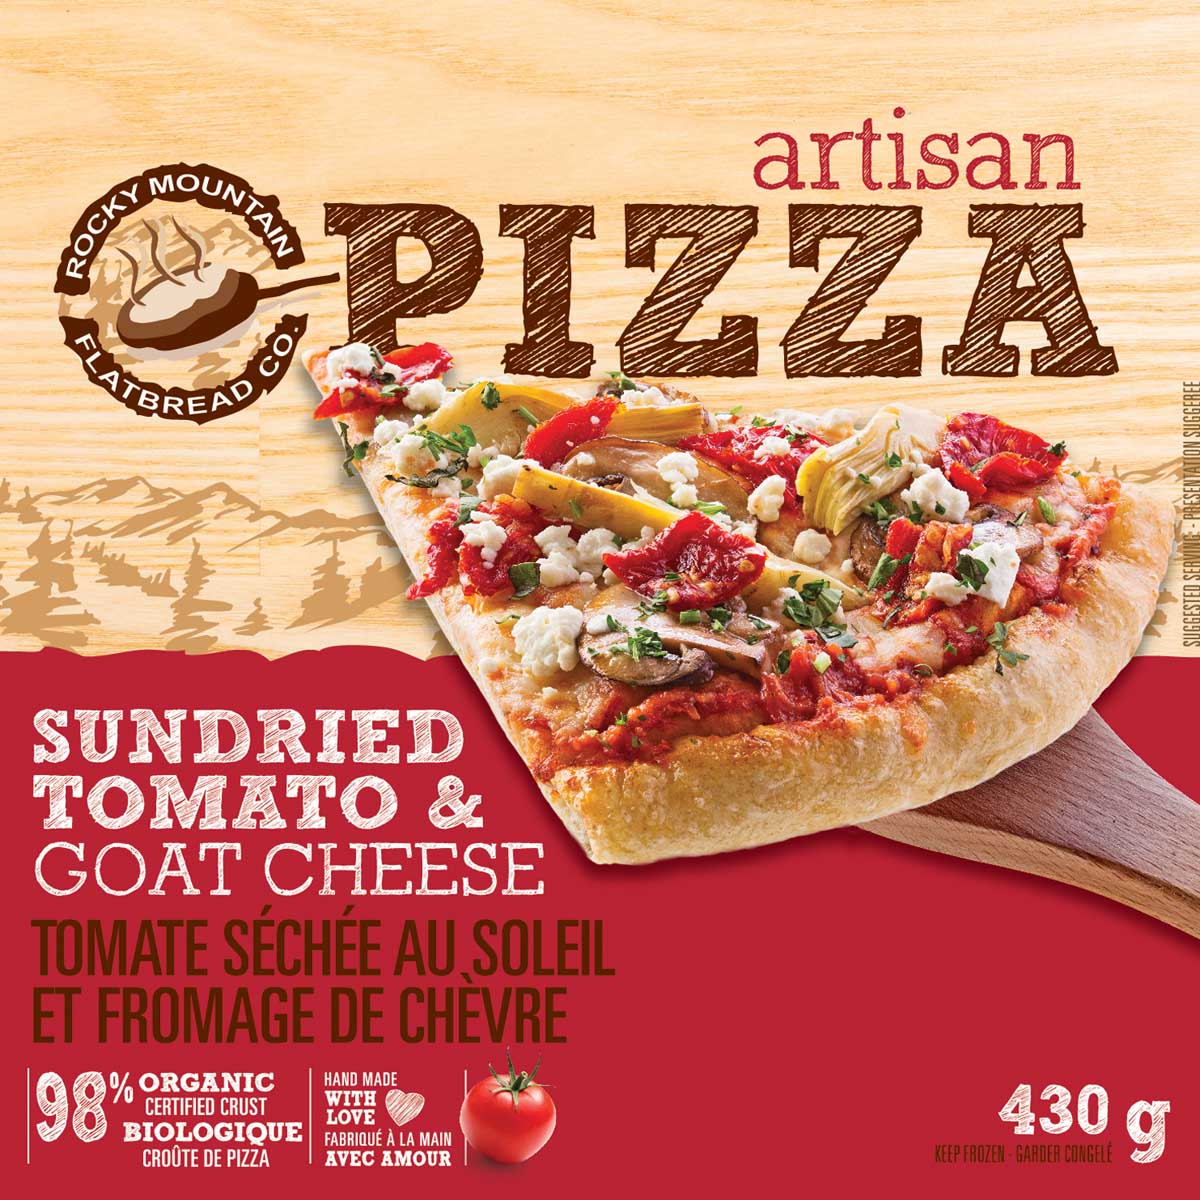 Take Home Frozen Sundried Tomato & Goat Cheese Pizza